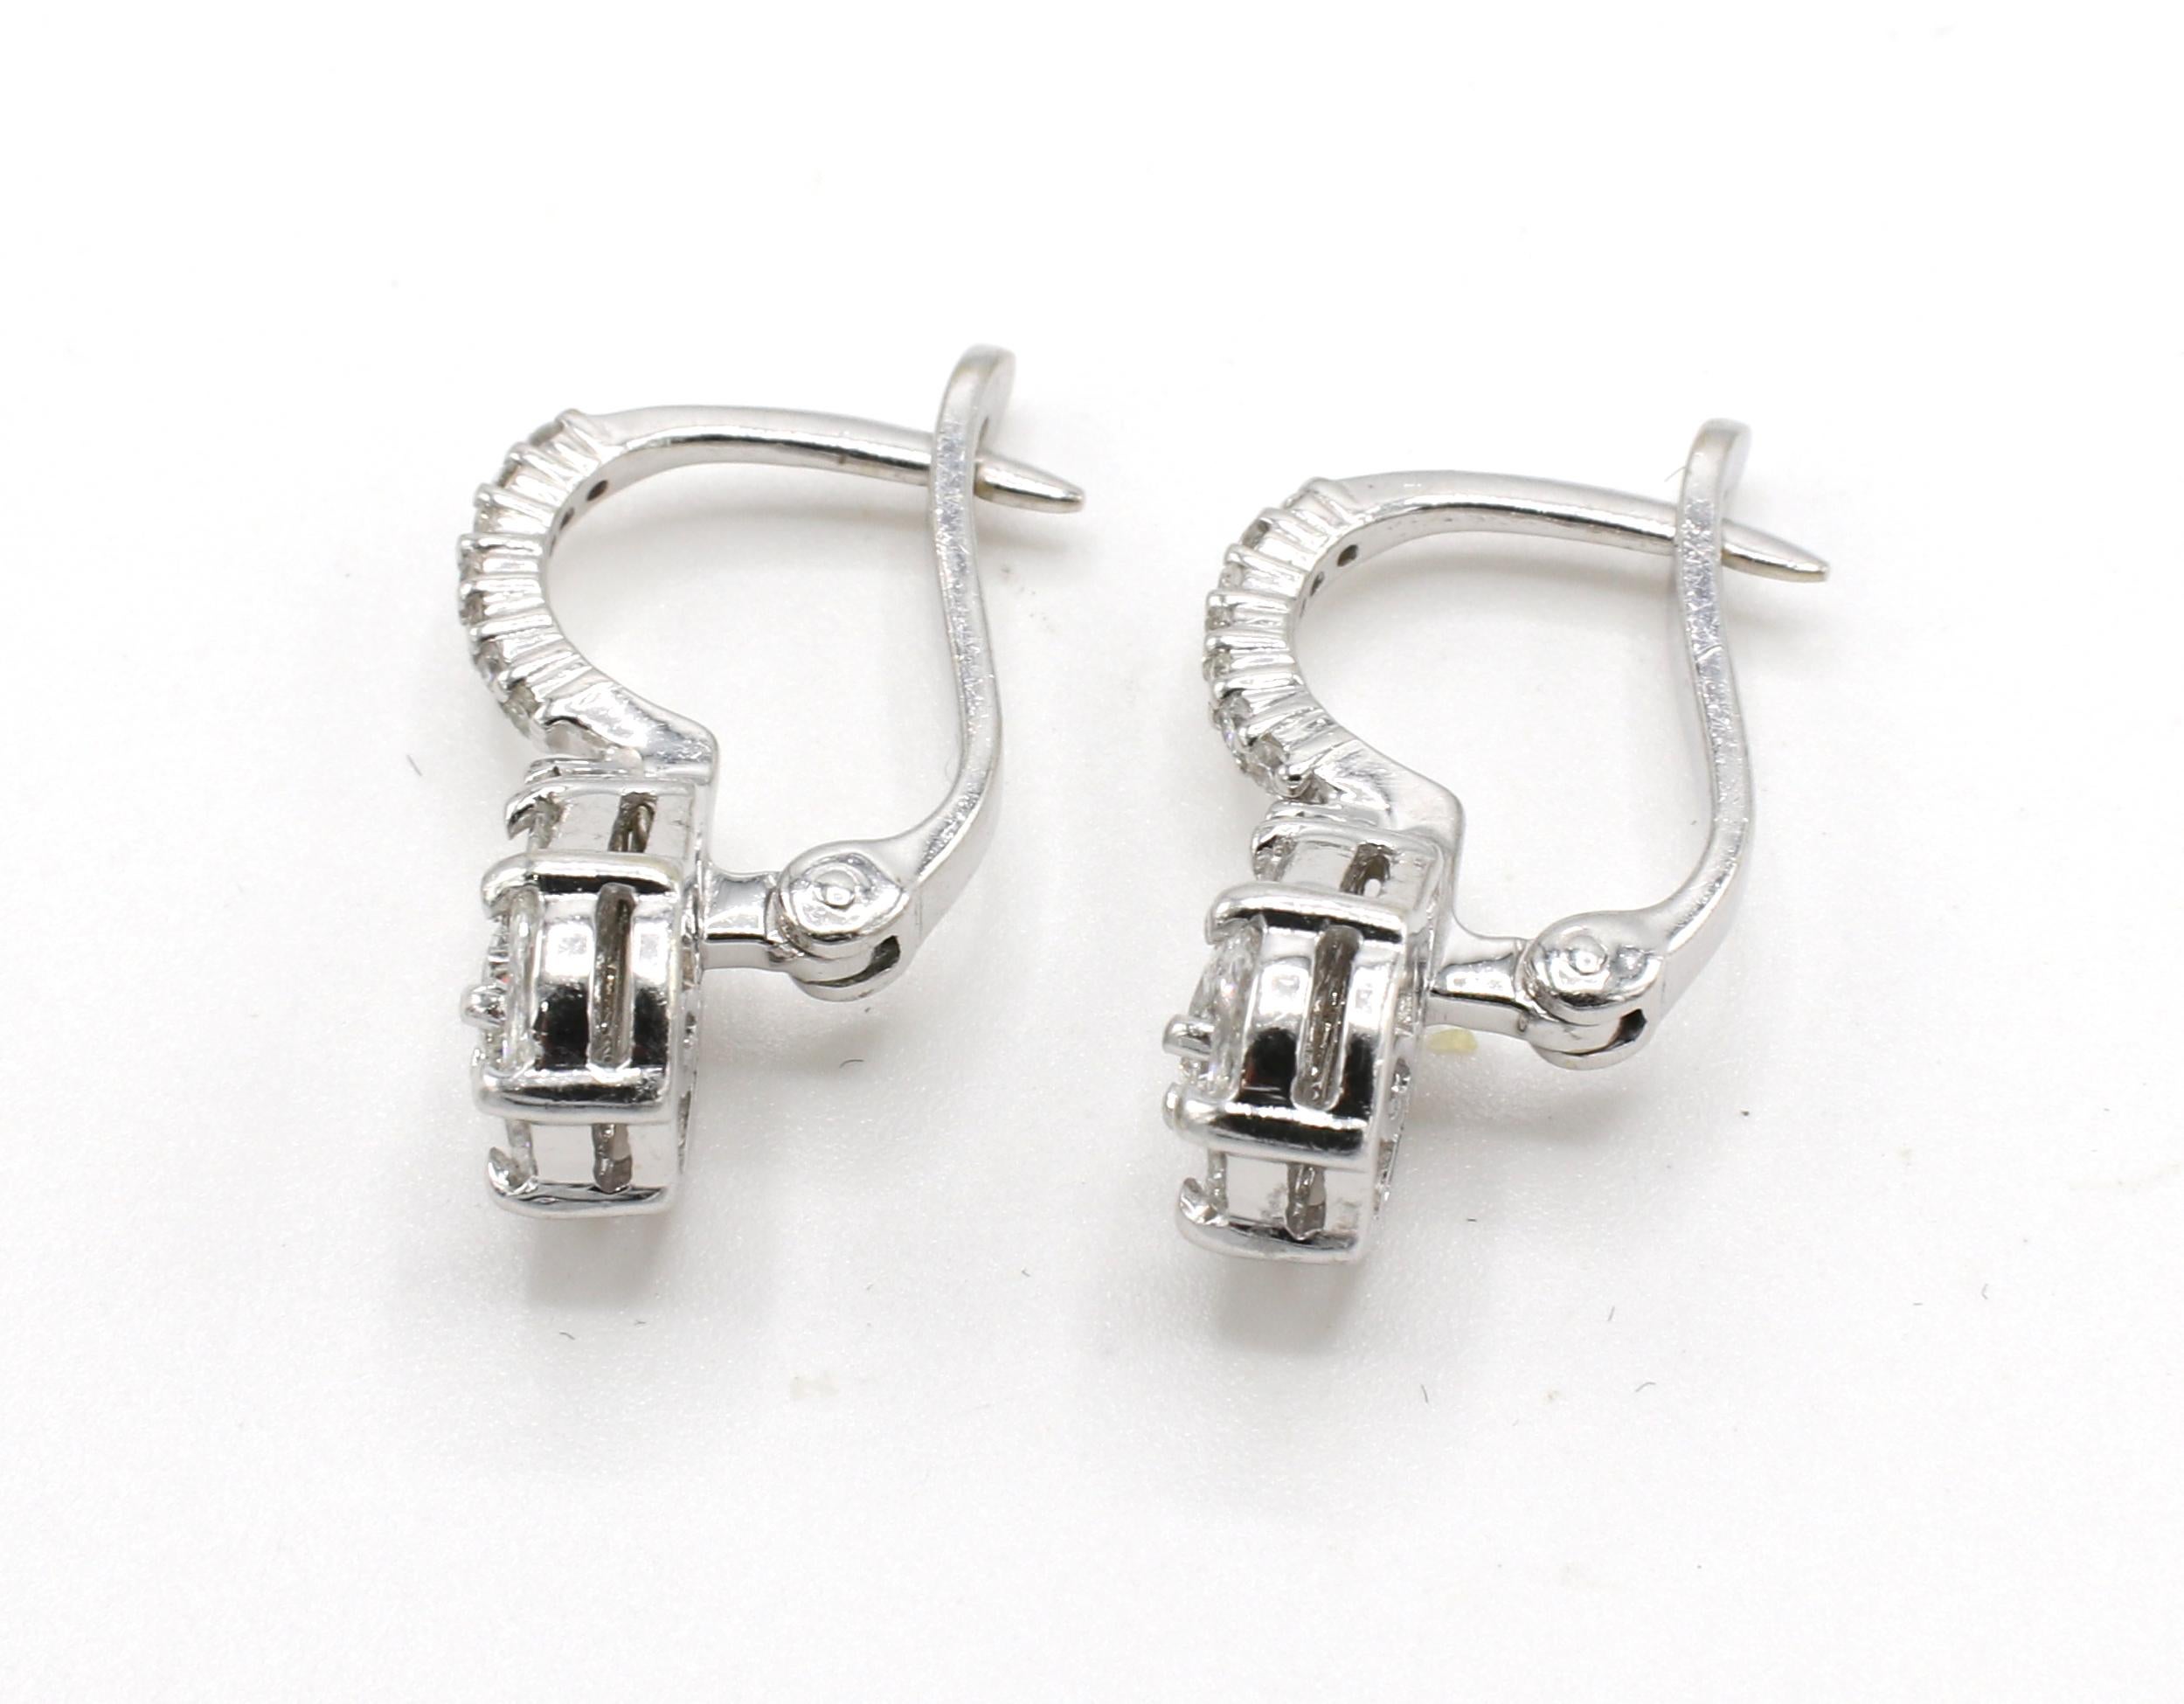 diamond shaped earrings hanging